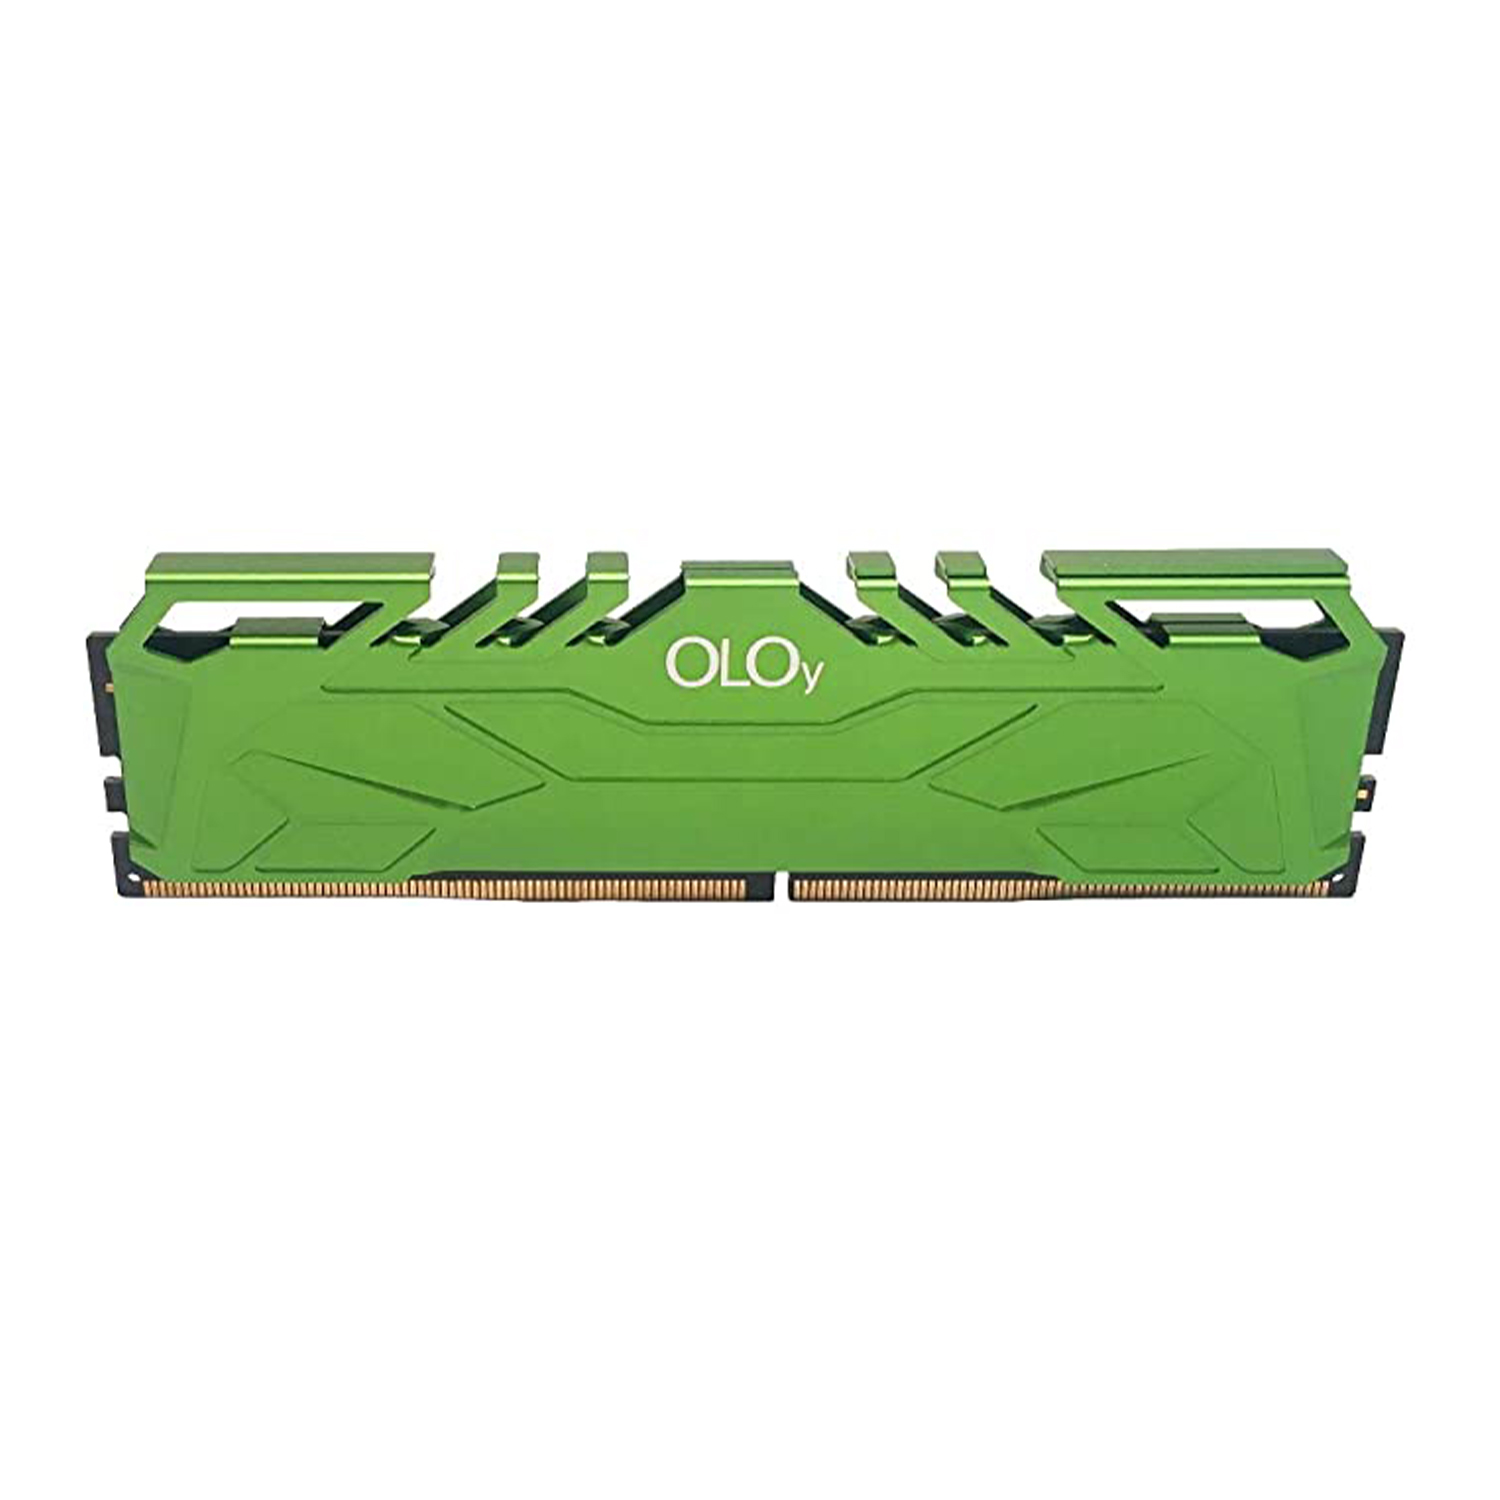 RAM (แรมพีซี) OLOY OWL GREEN 8GB DDR4 3200MHz